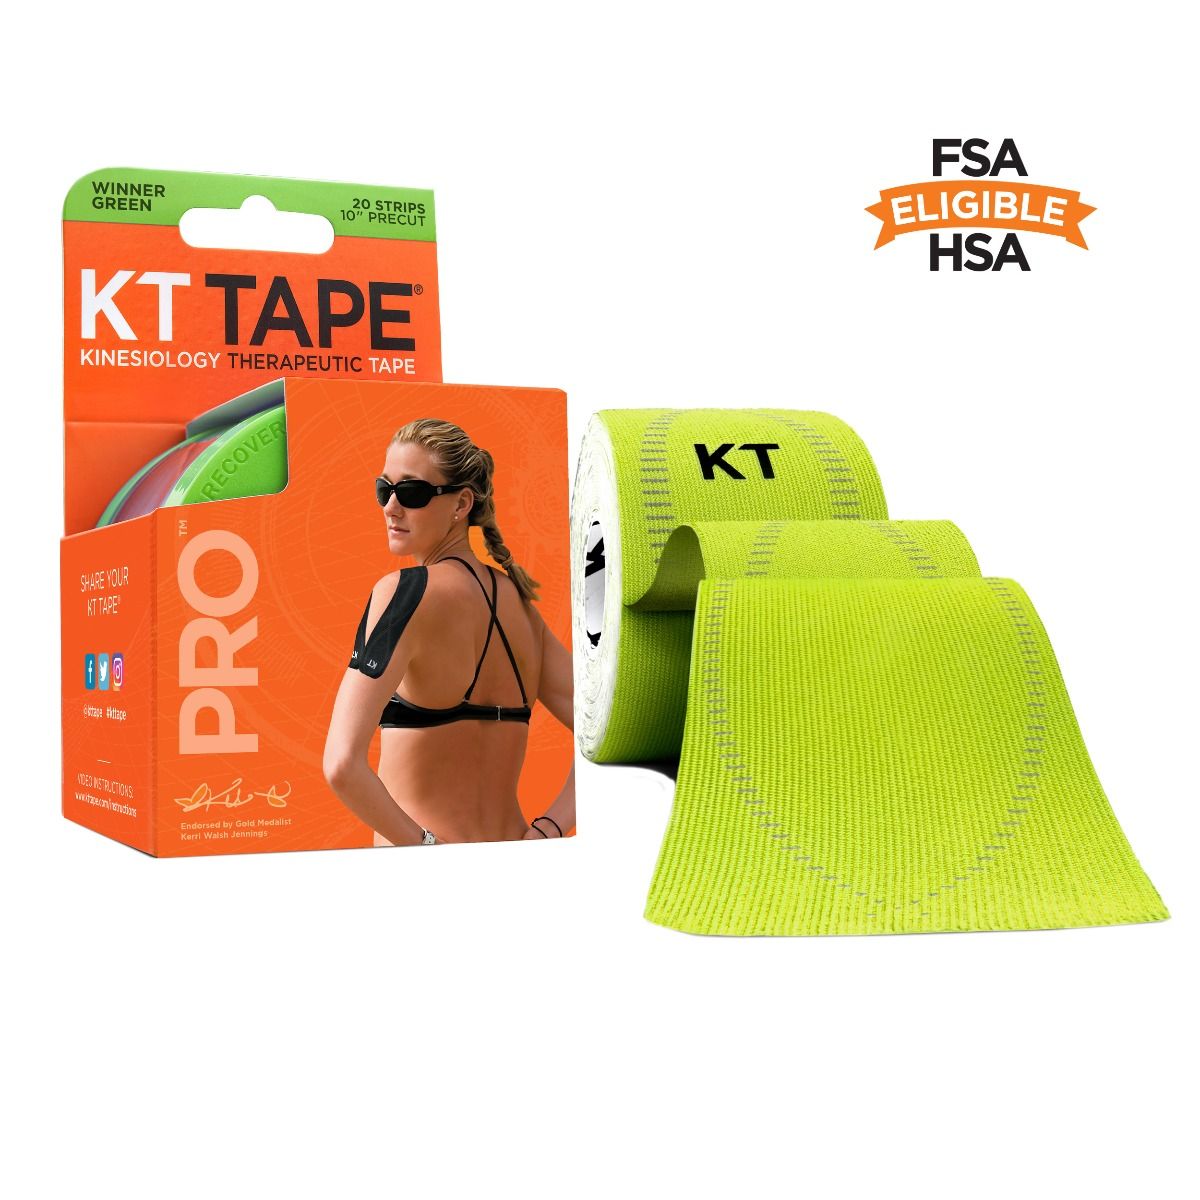 KT Tape Pro - Voorgesneden - Winner Green - 5cm x 5m - Intertaping.nl